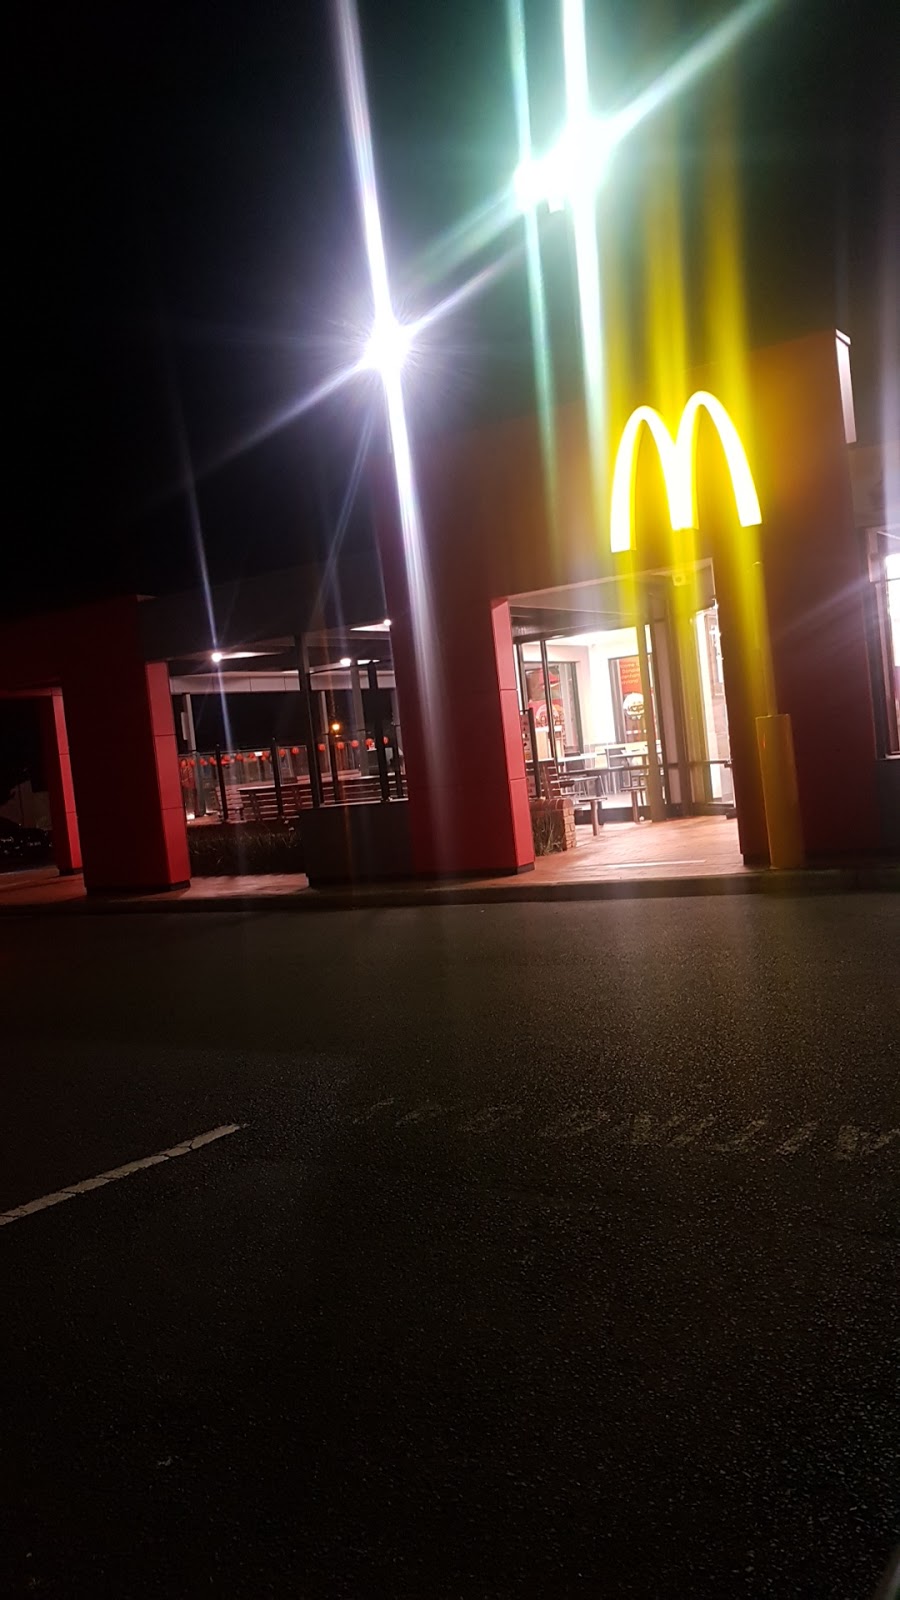 McDonalds Sydenham | Cnr Melton Highway &, Calder Park Dr, Sydenham VIC 3038, Australia | Phone: (03) 9390 5611